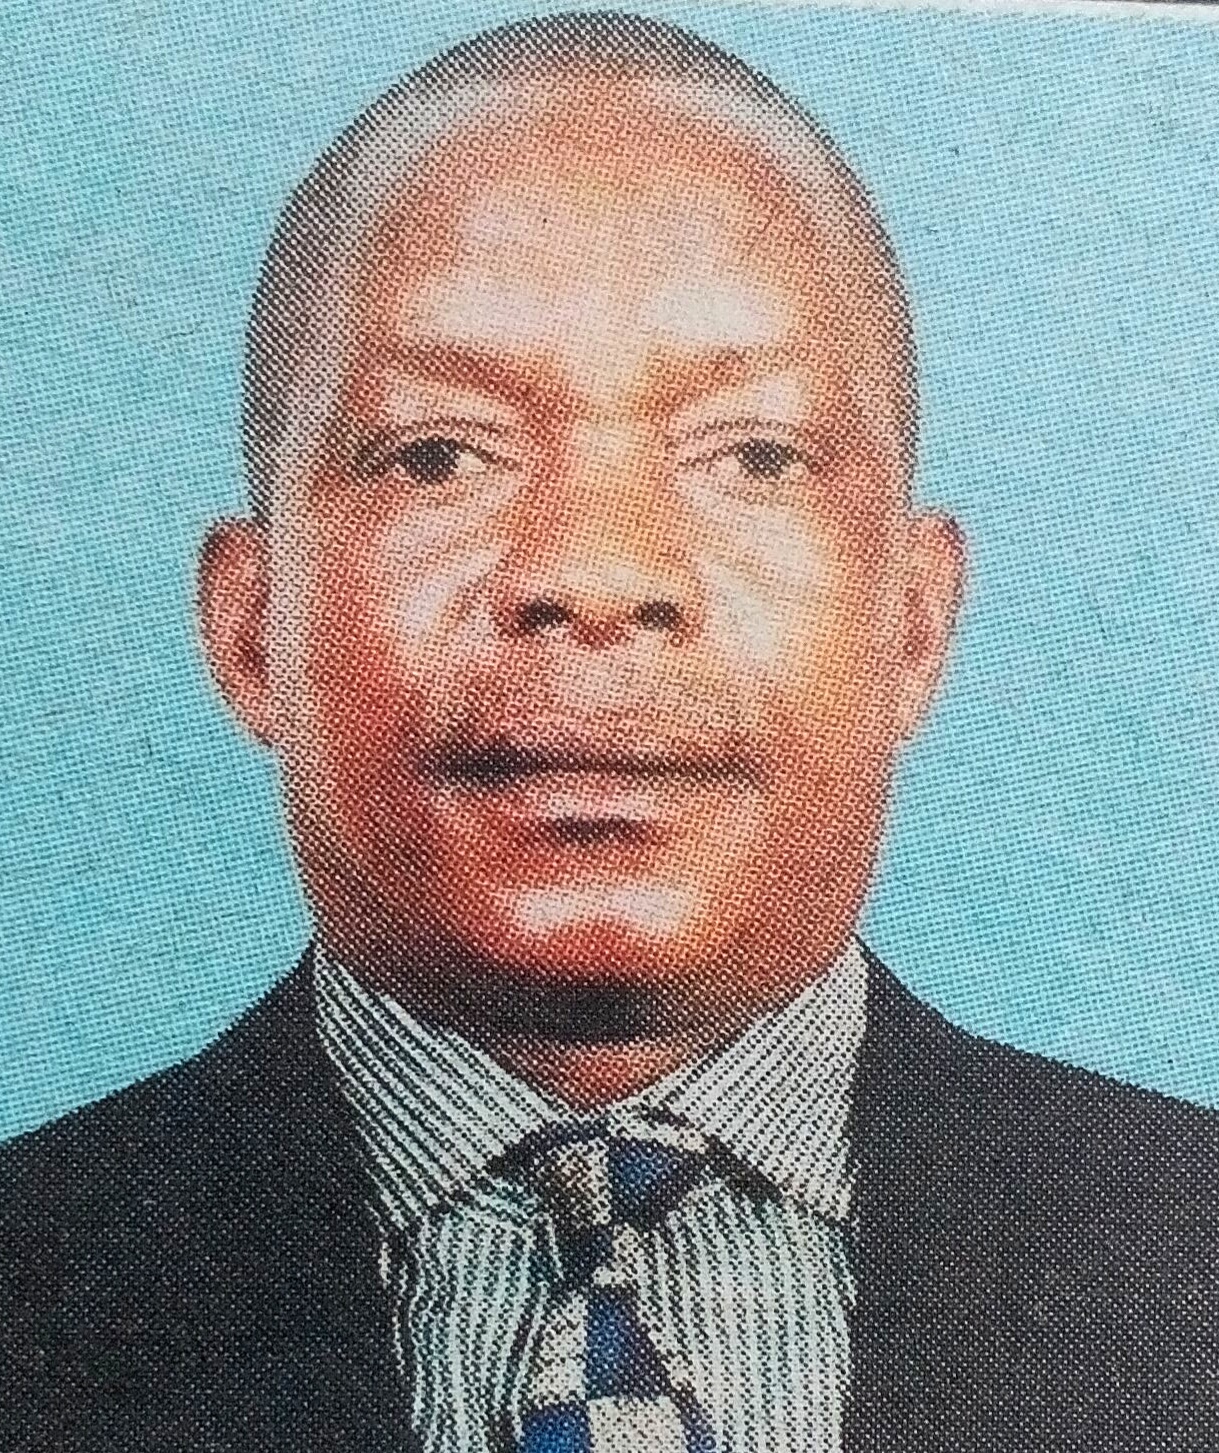 Obituary Image of John Kitivo Mbindyo